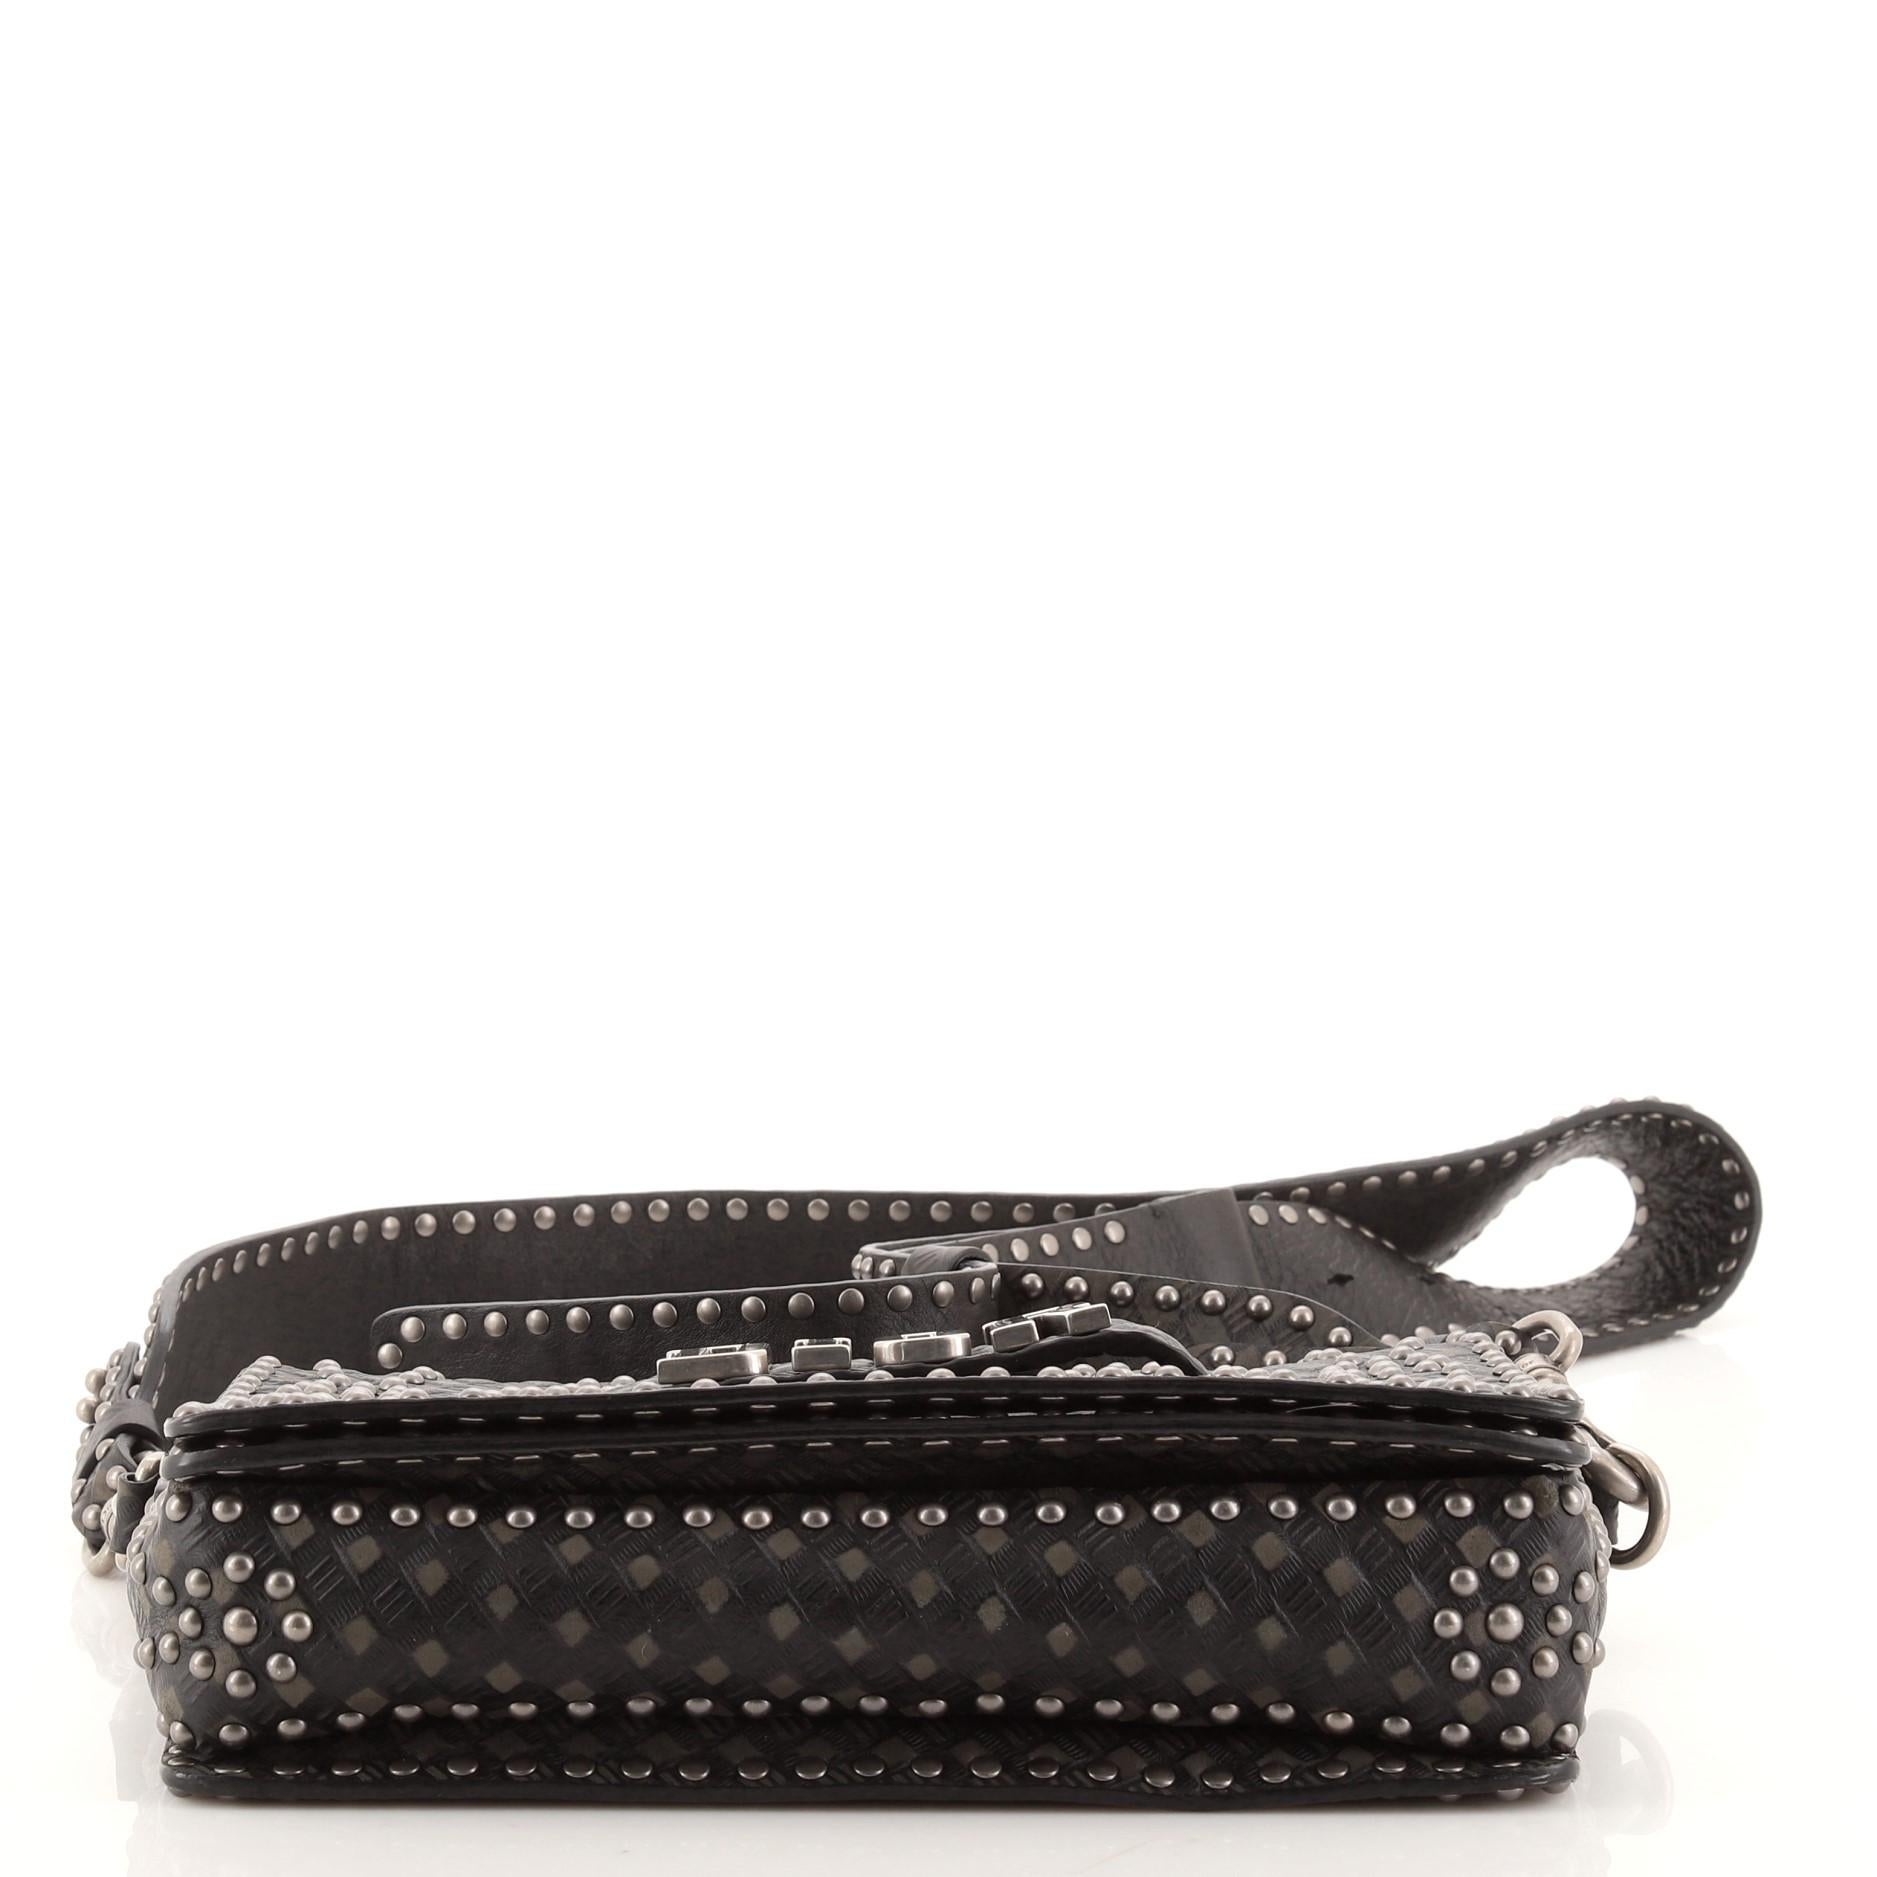 Black Christian Dior Dio(r)evolution Flap Bag Studded Embossed Leather Medium